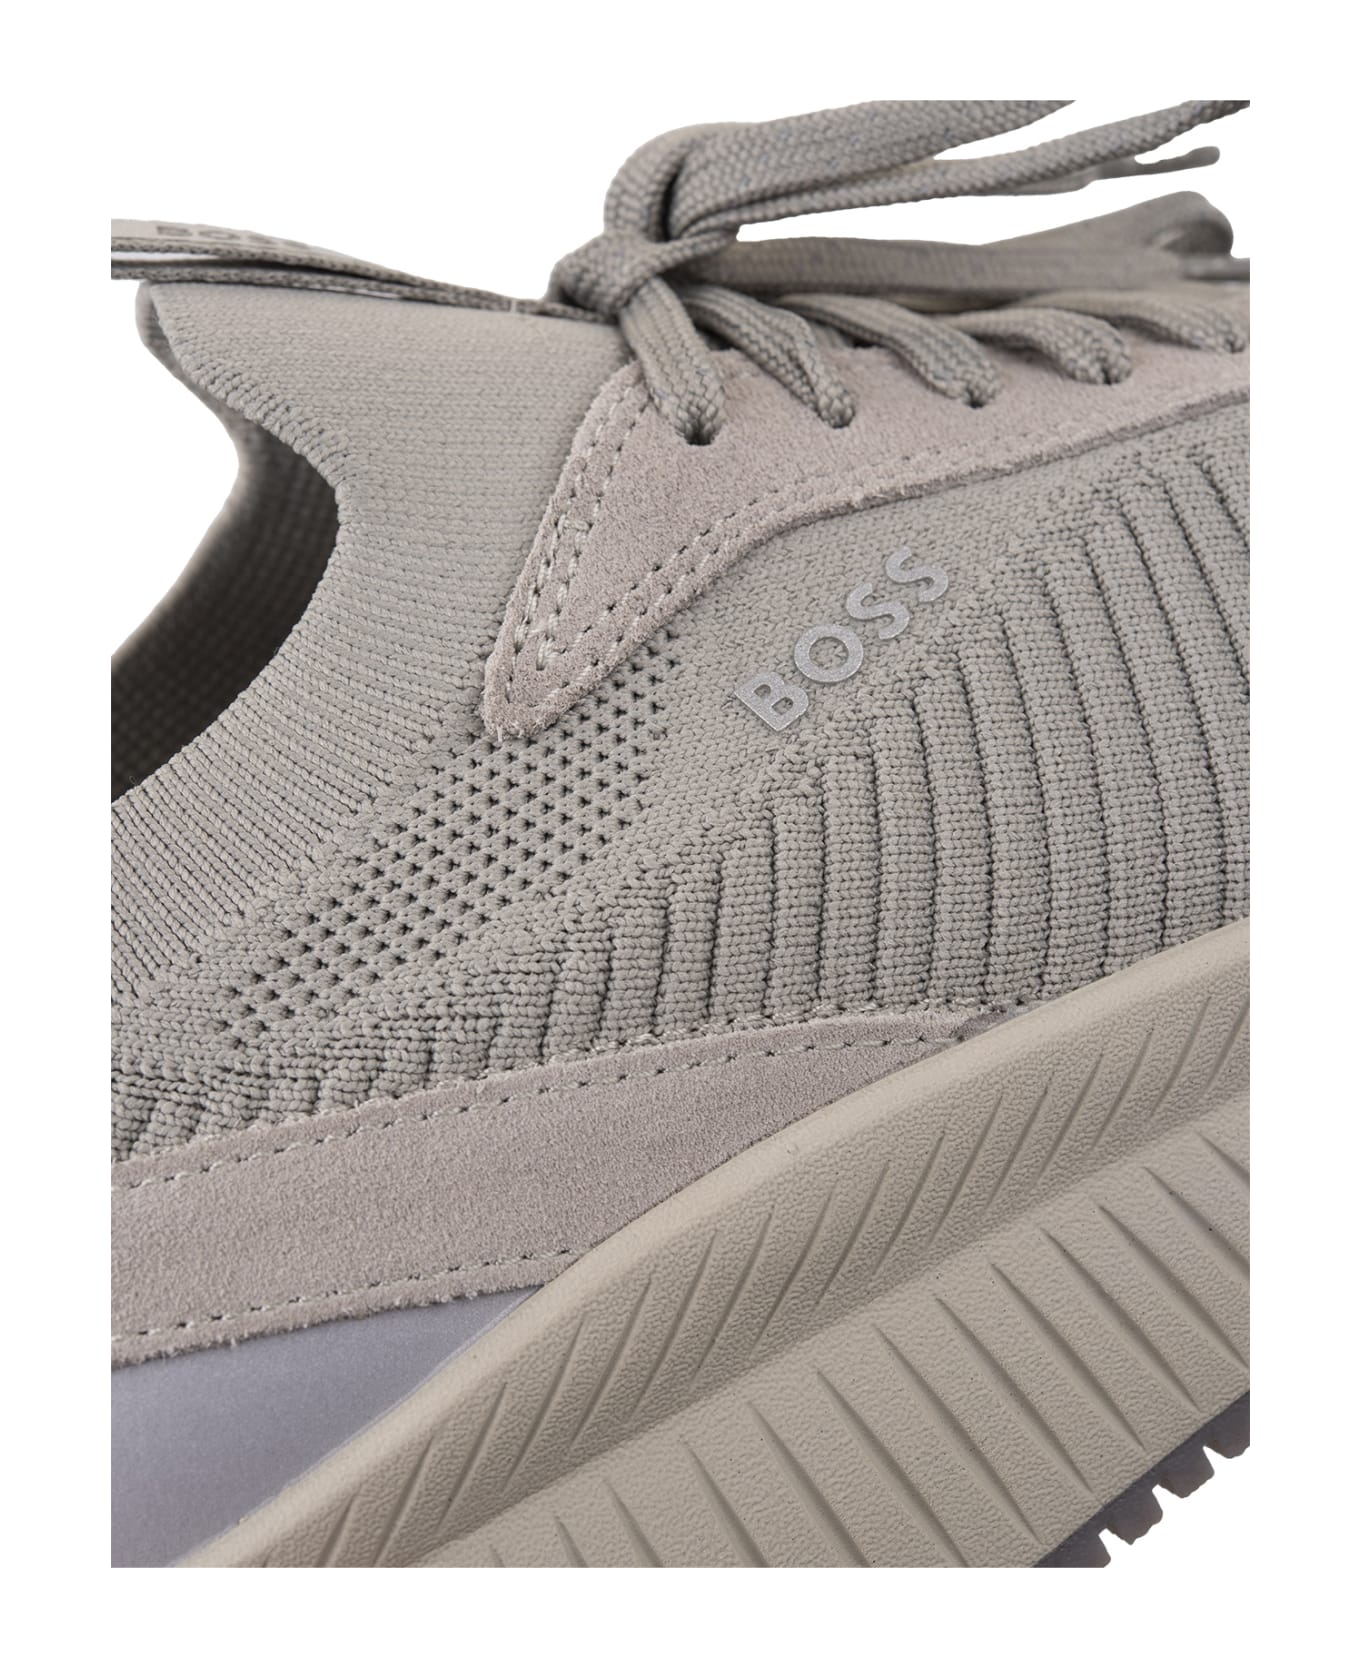 Hugo Boss Grey Sock Sneakers With Knitted Upper And Herringbone Sole - Grey